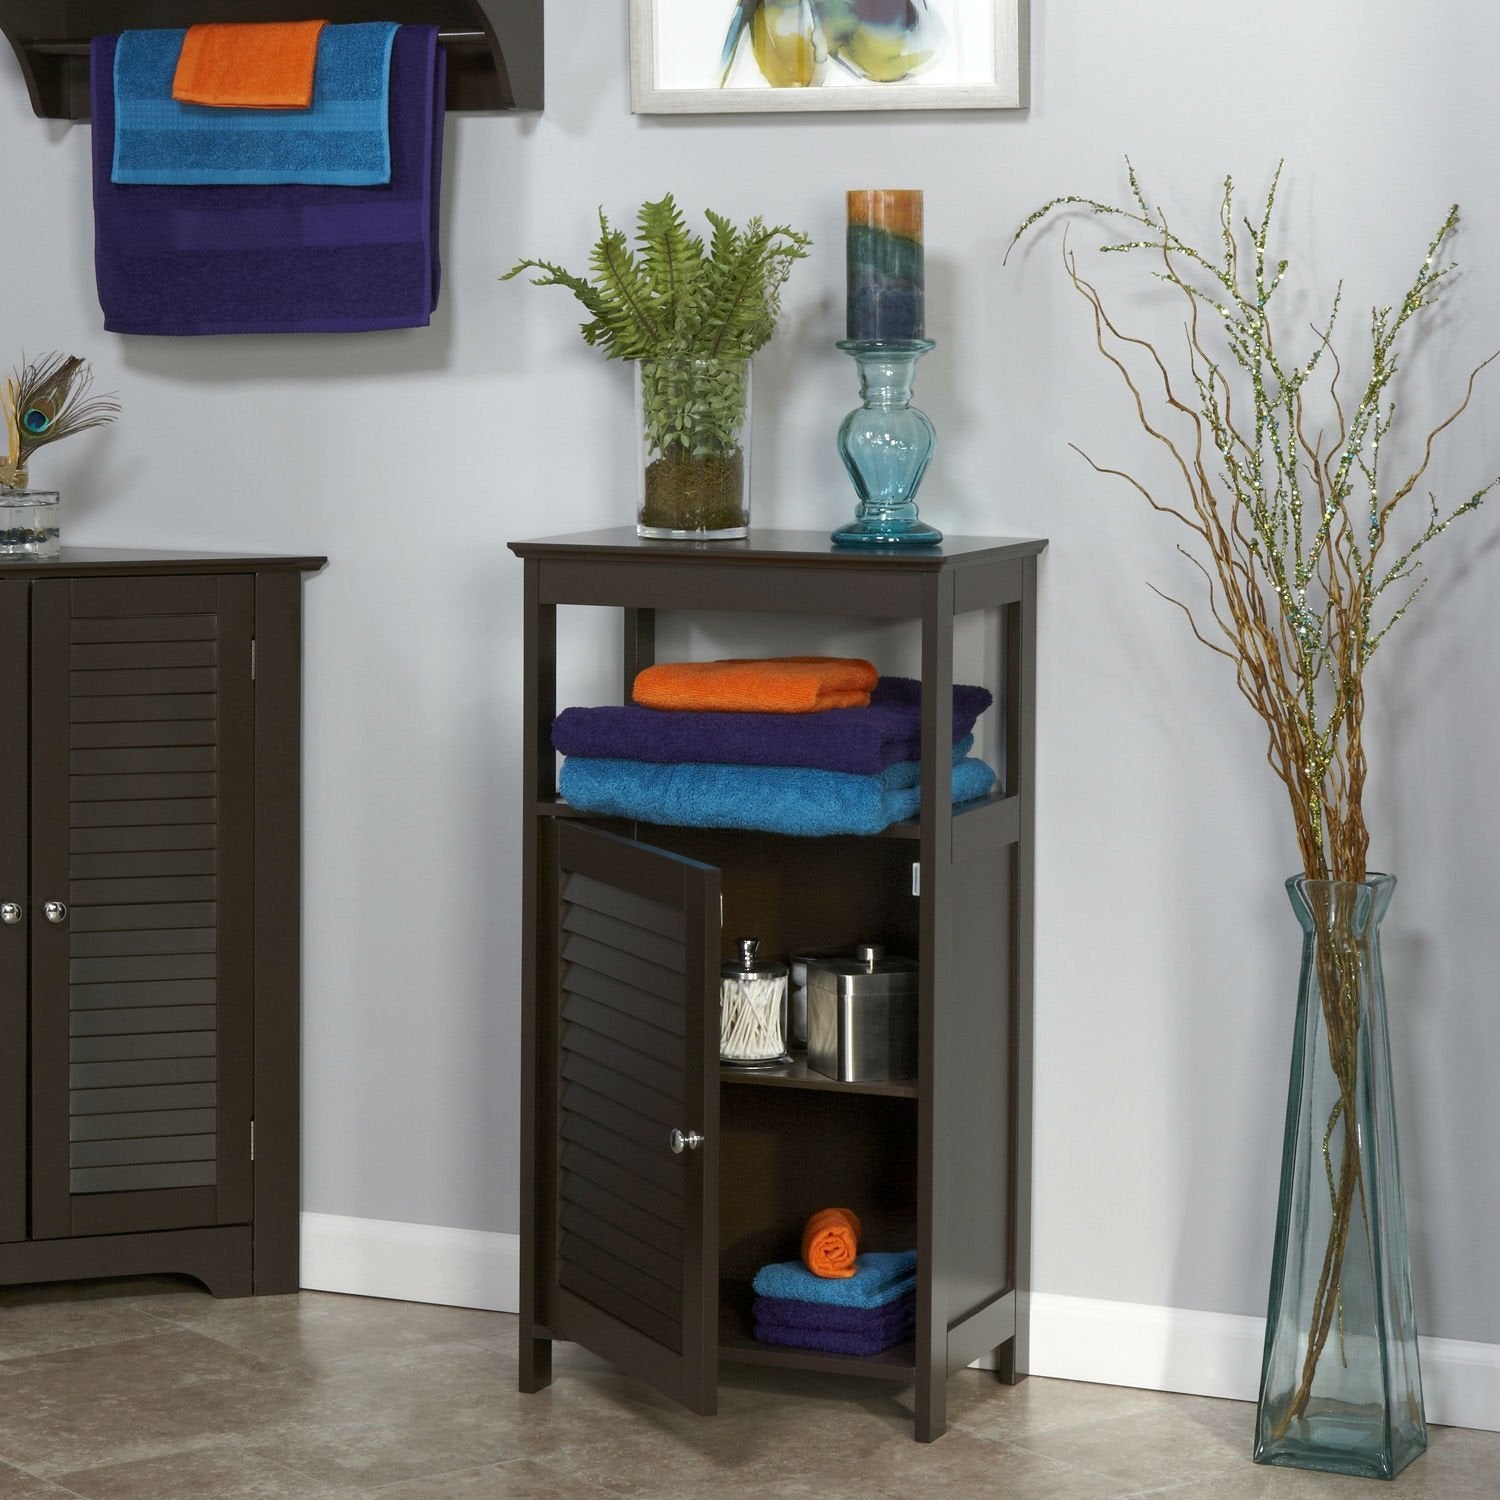 Modern Bathroom Floor Cabinet Free Standing Storage Unit in Espresso Wood Finish